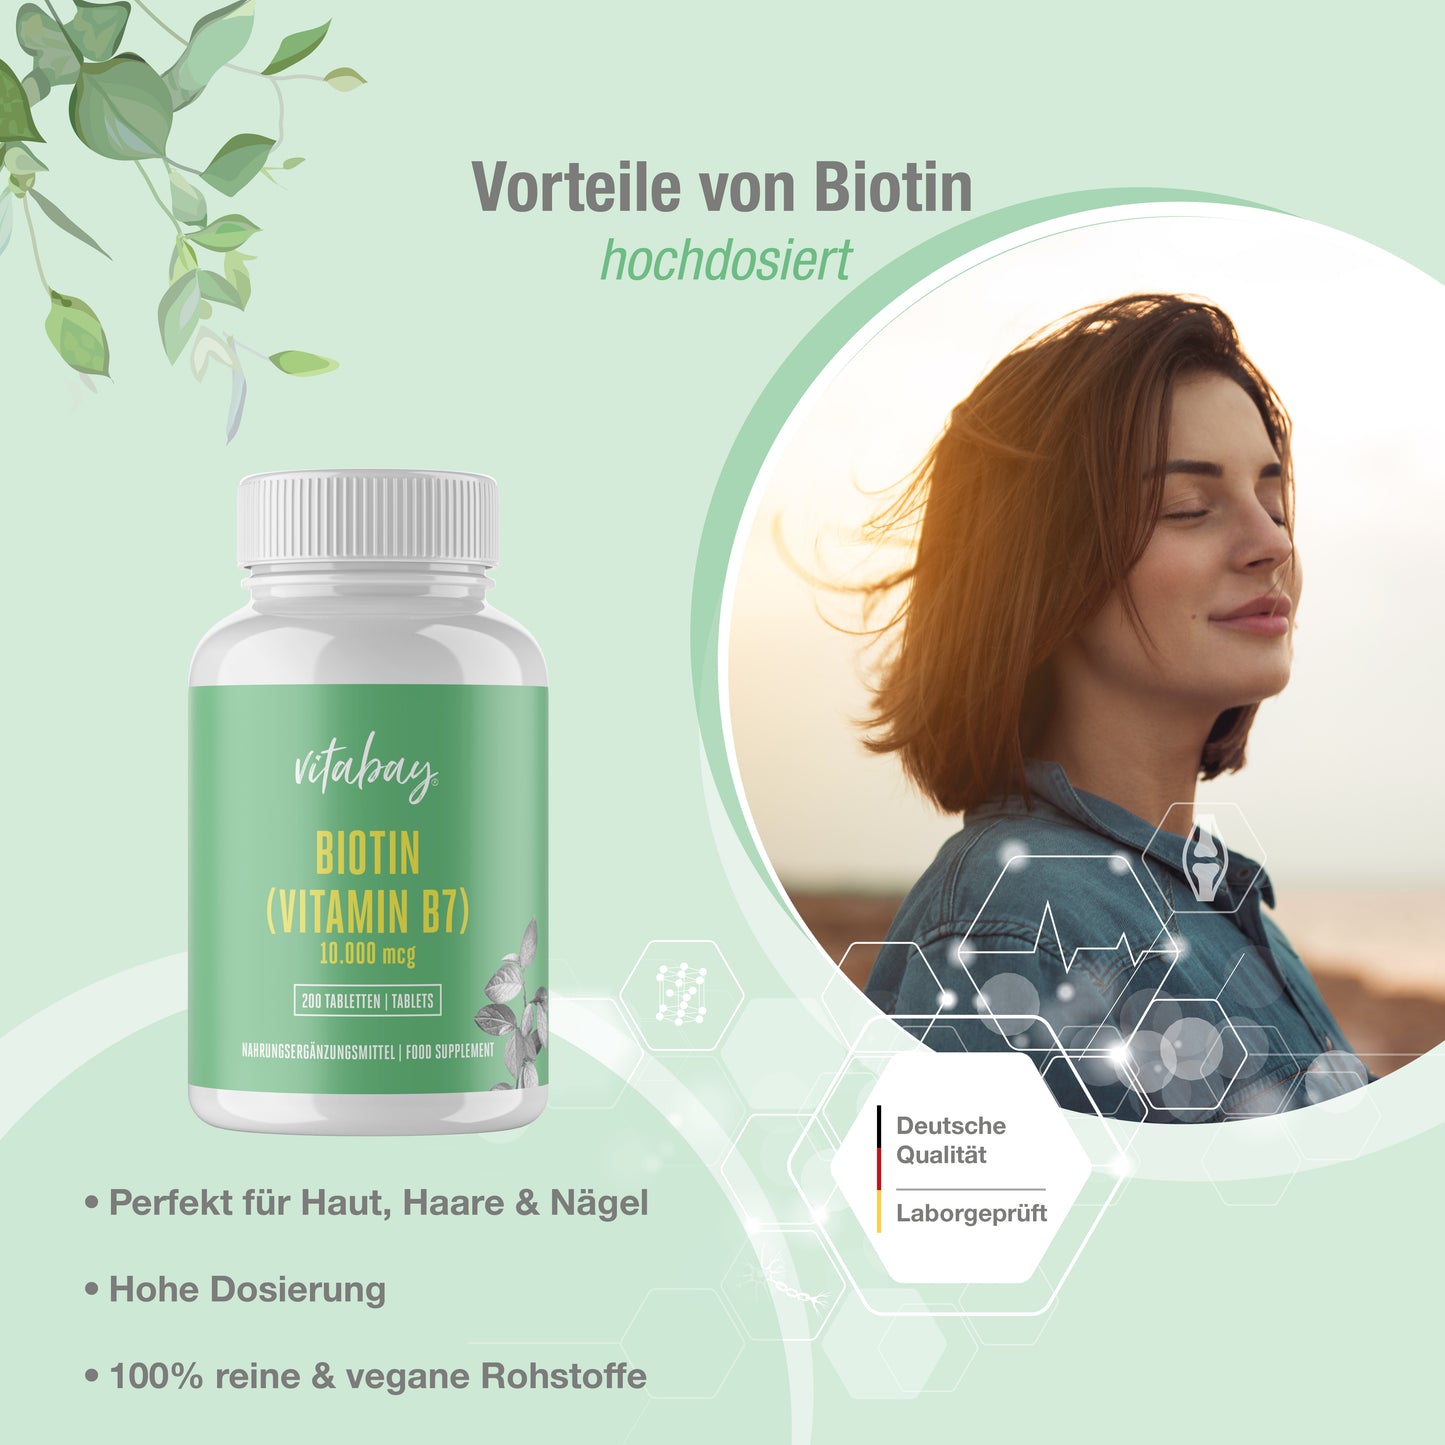 Biotin (Vitamin B7) 10.000 mcg  - 200 vegane Tabletten